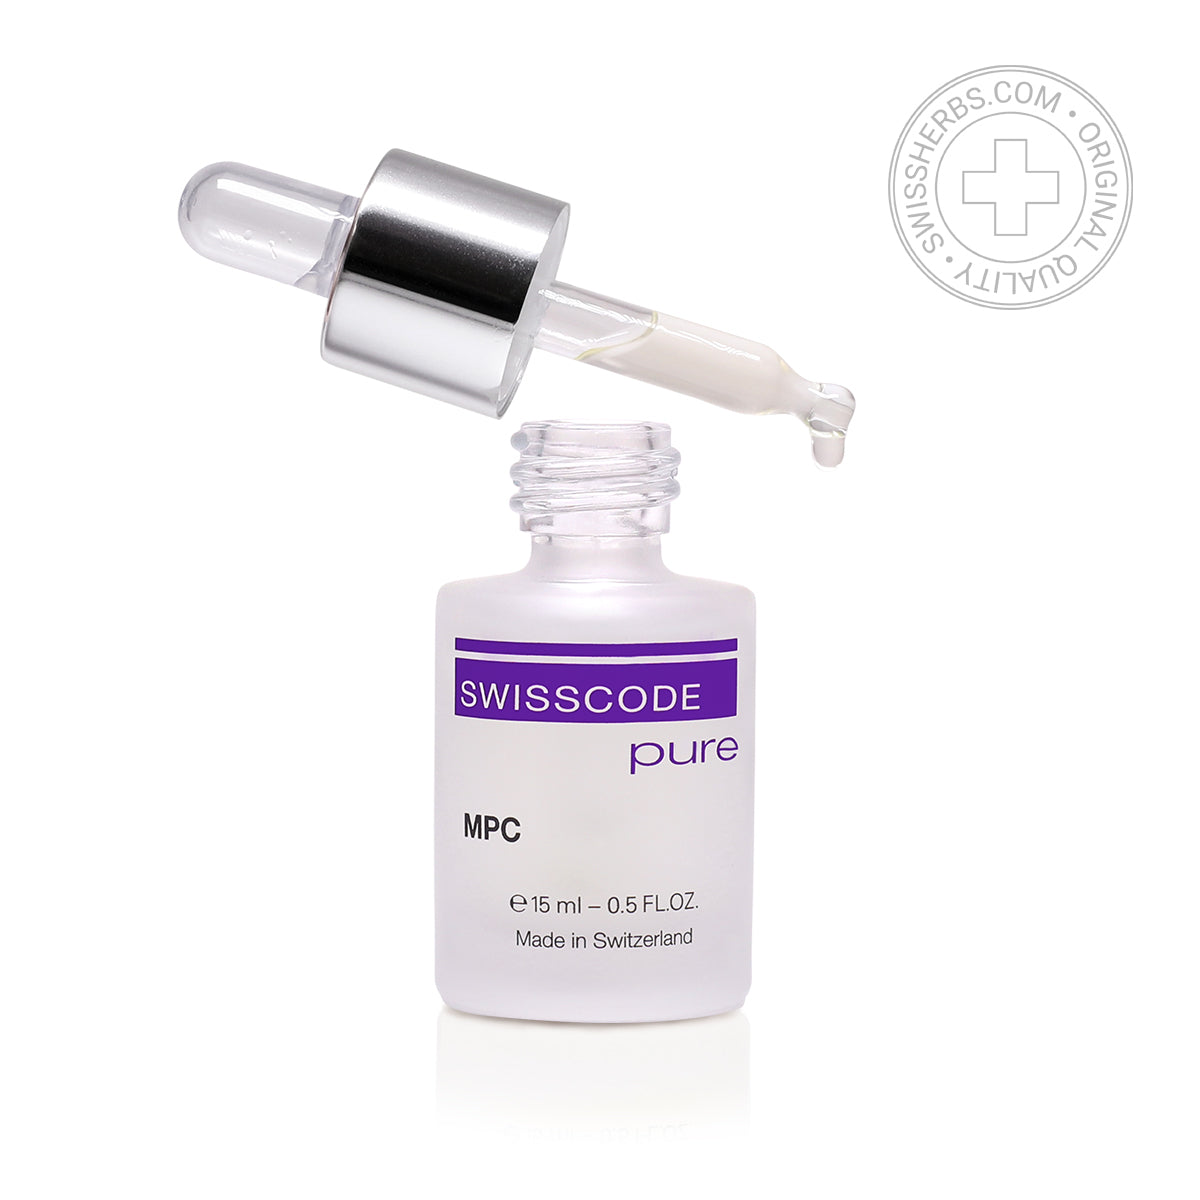 Swisscode Pure MPC rejuvenating serum for firm and elastic skin, 15 ml.